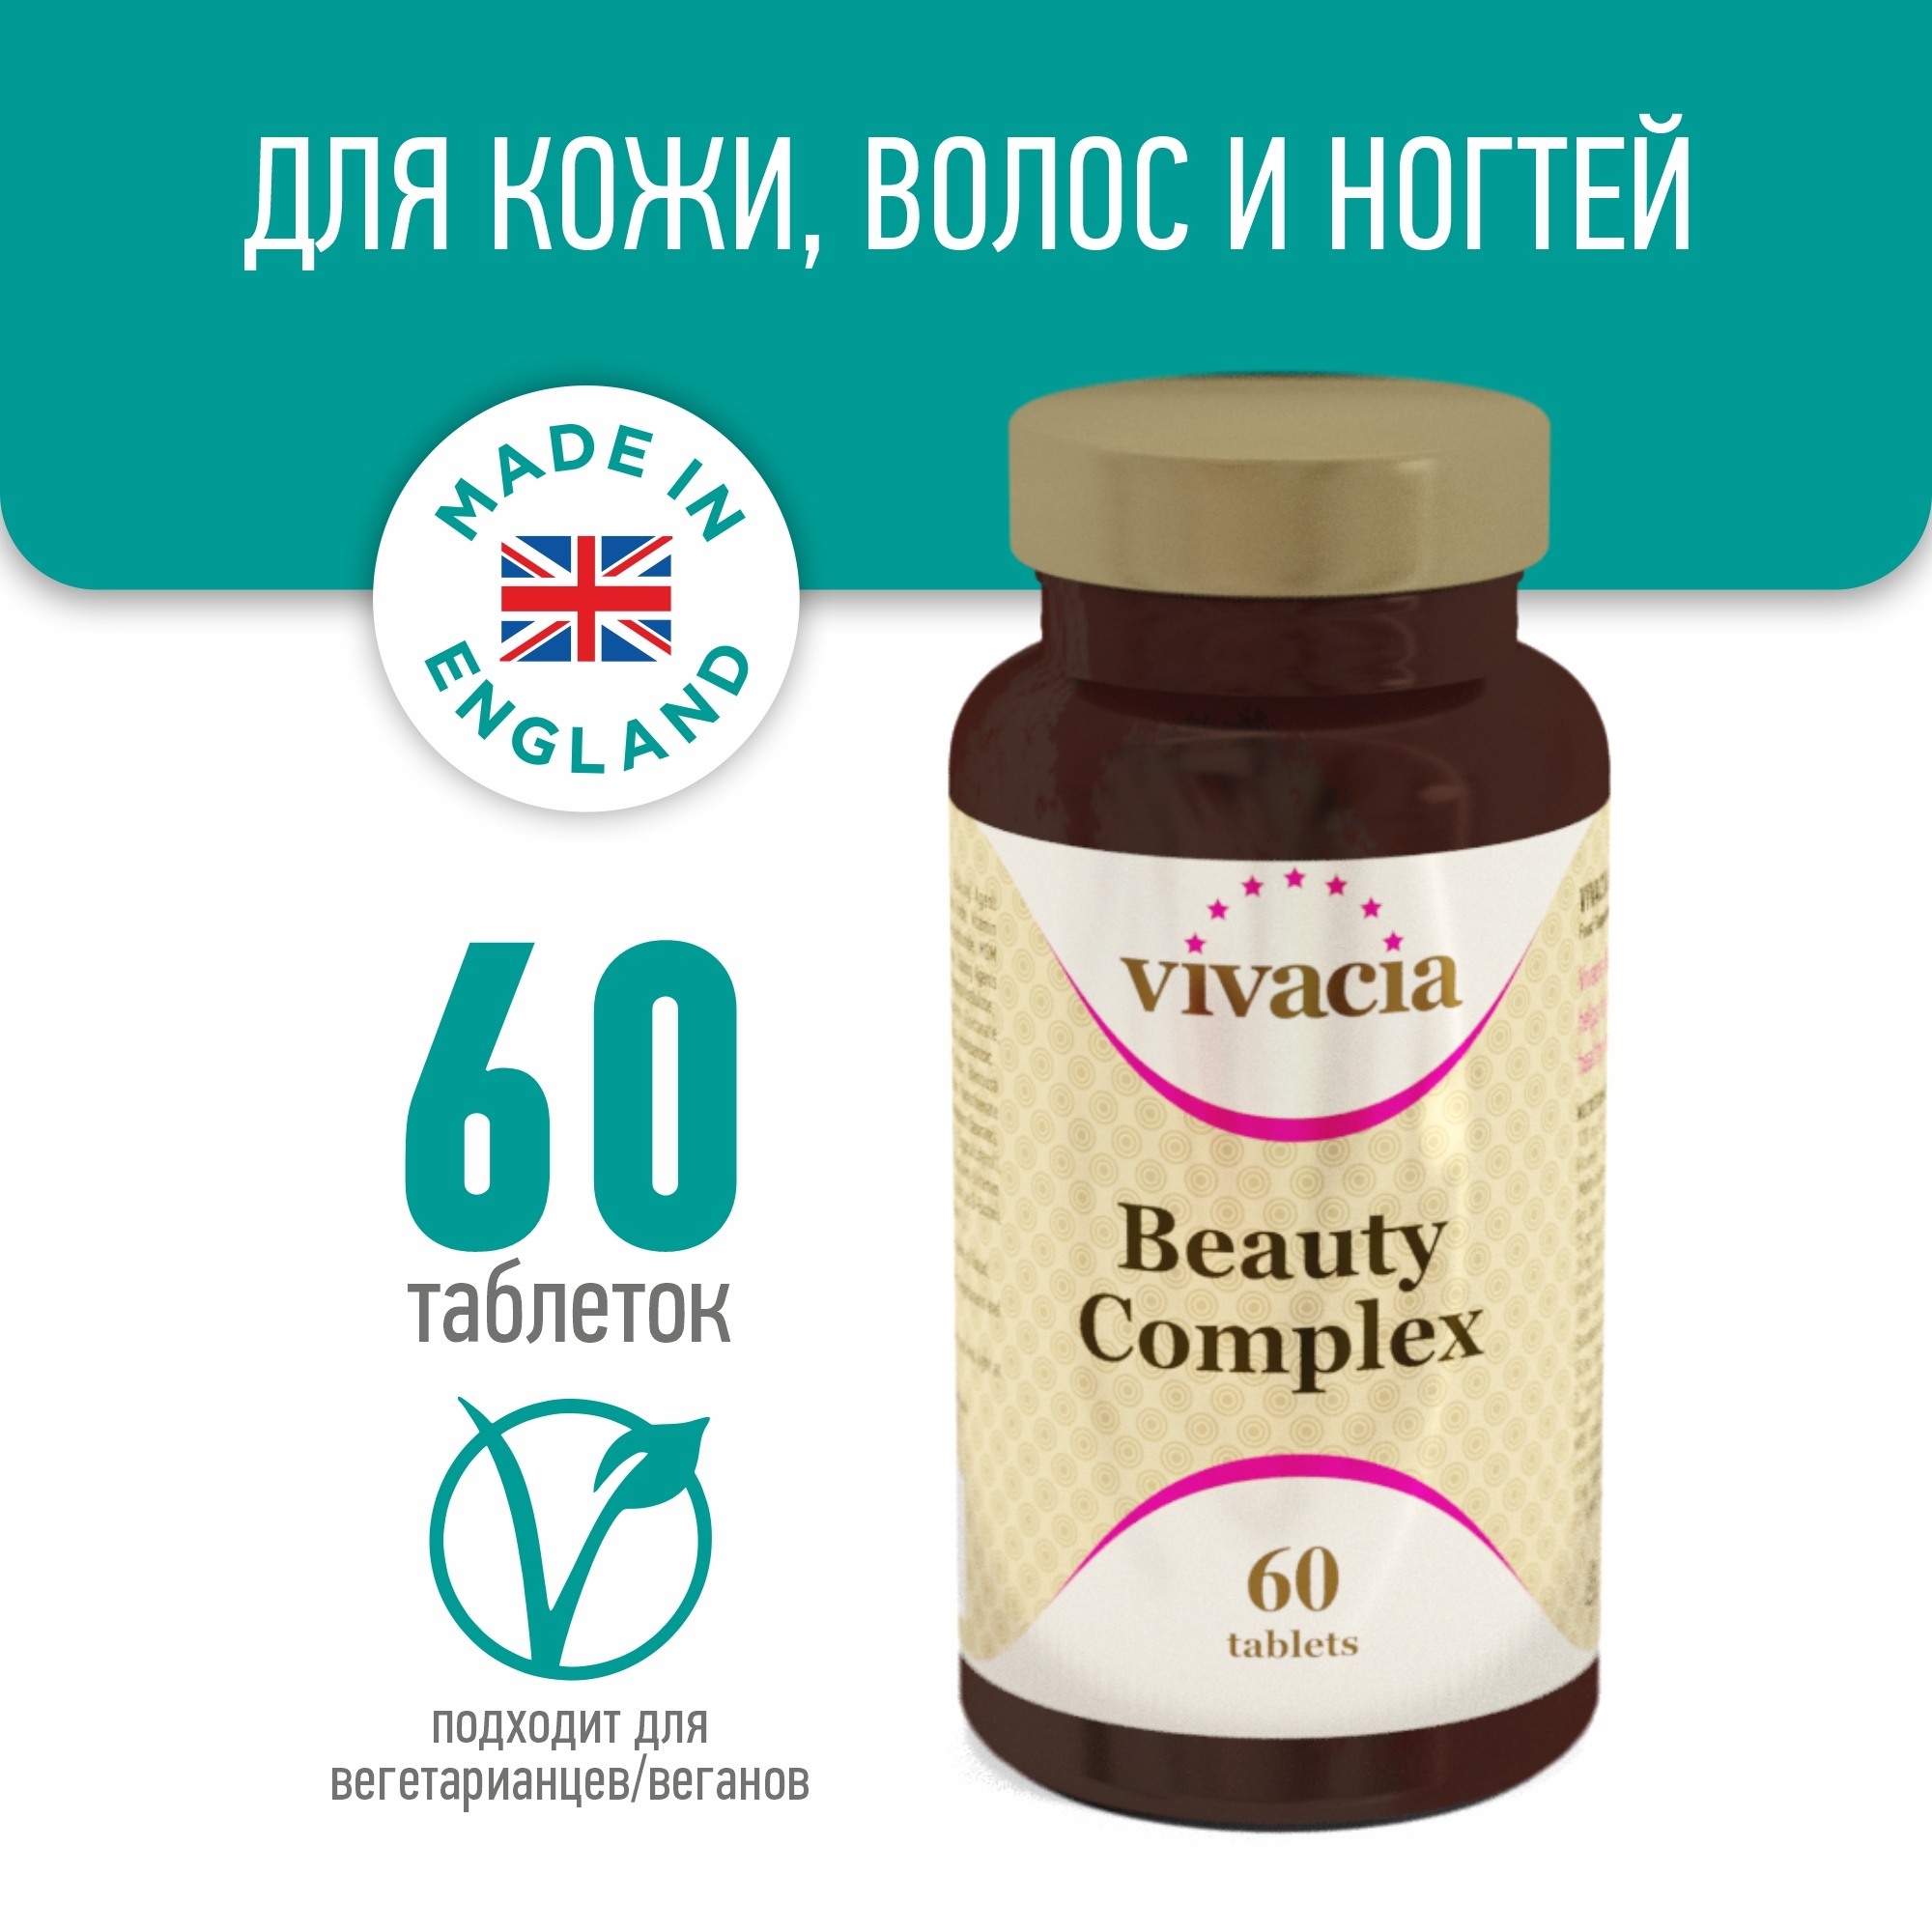 Vivacia vitamin. Цинк магний и витамин в6 таб 60 шт vivacia Вивация. Vivacia Multi Eye. Vivacia витамины группы в Vitamin b-Complex таб 60 шт. Вивация цинк Магнезиум в6.